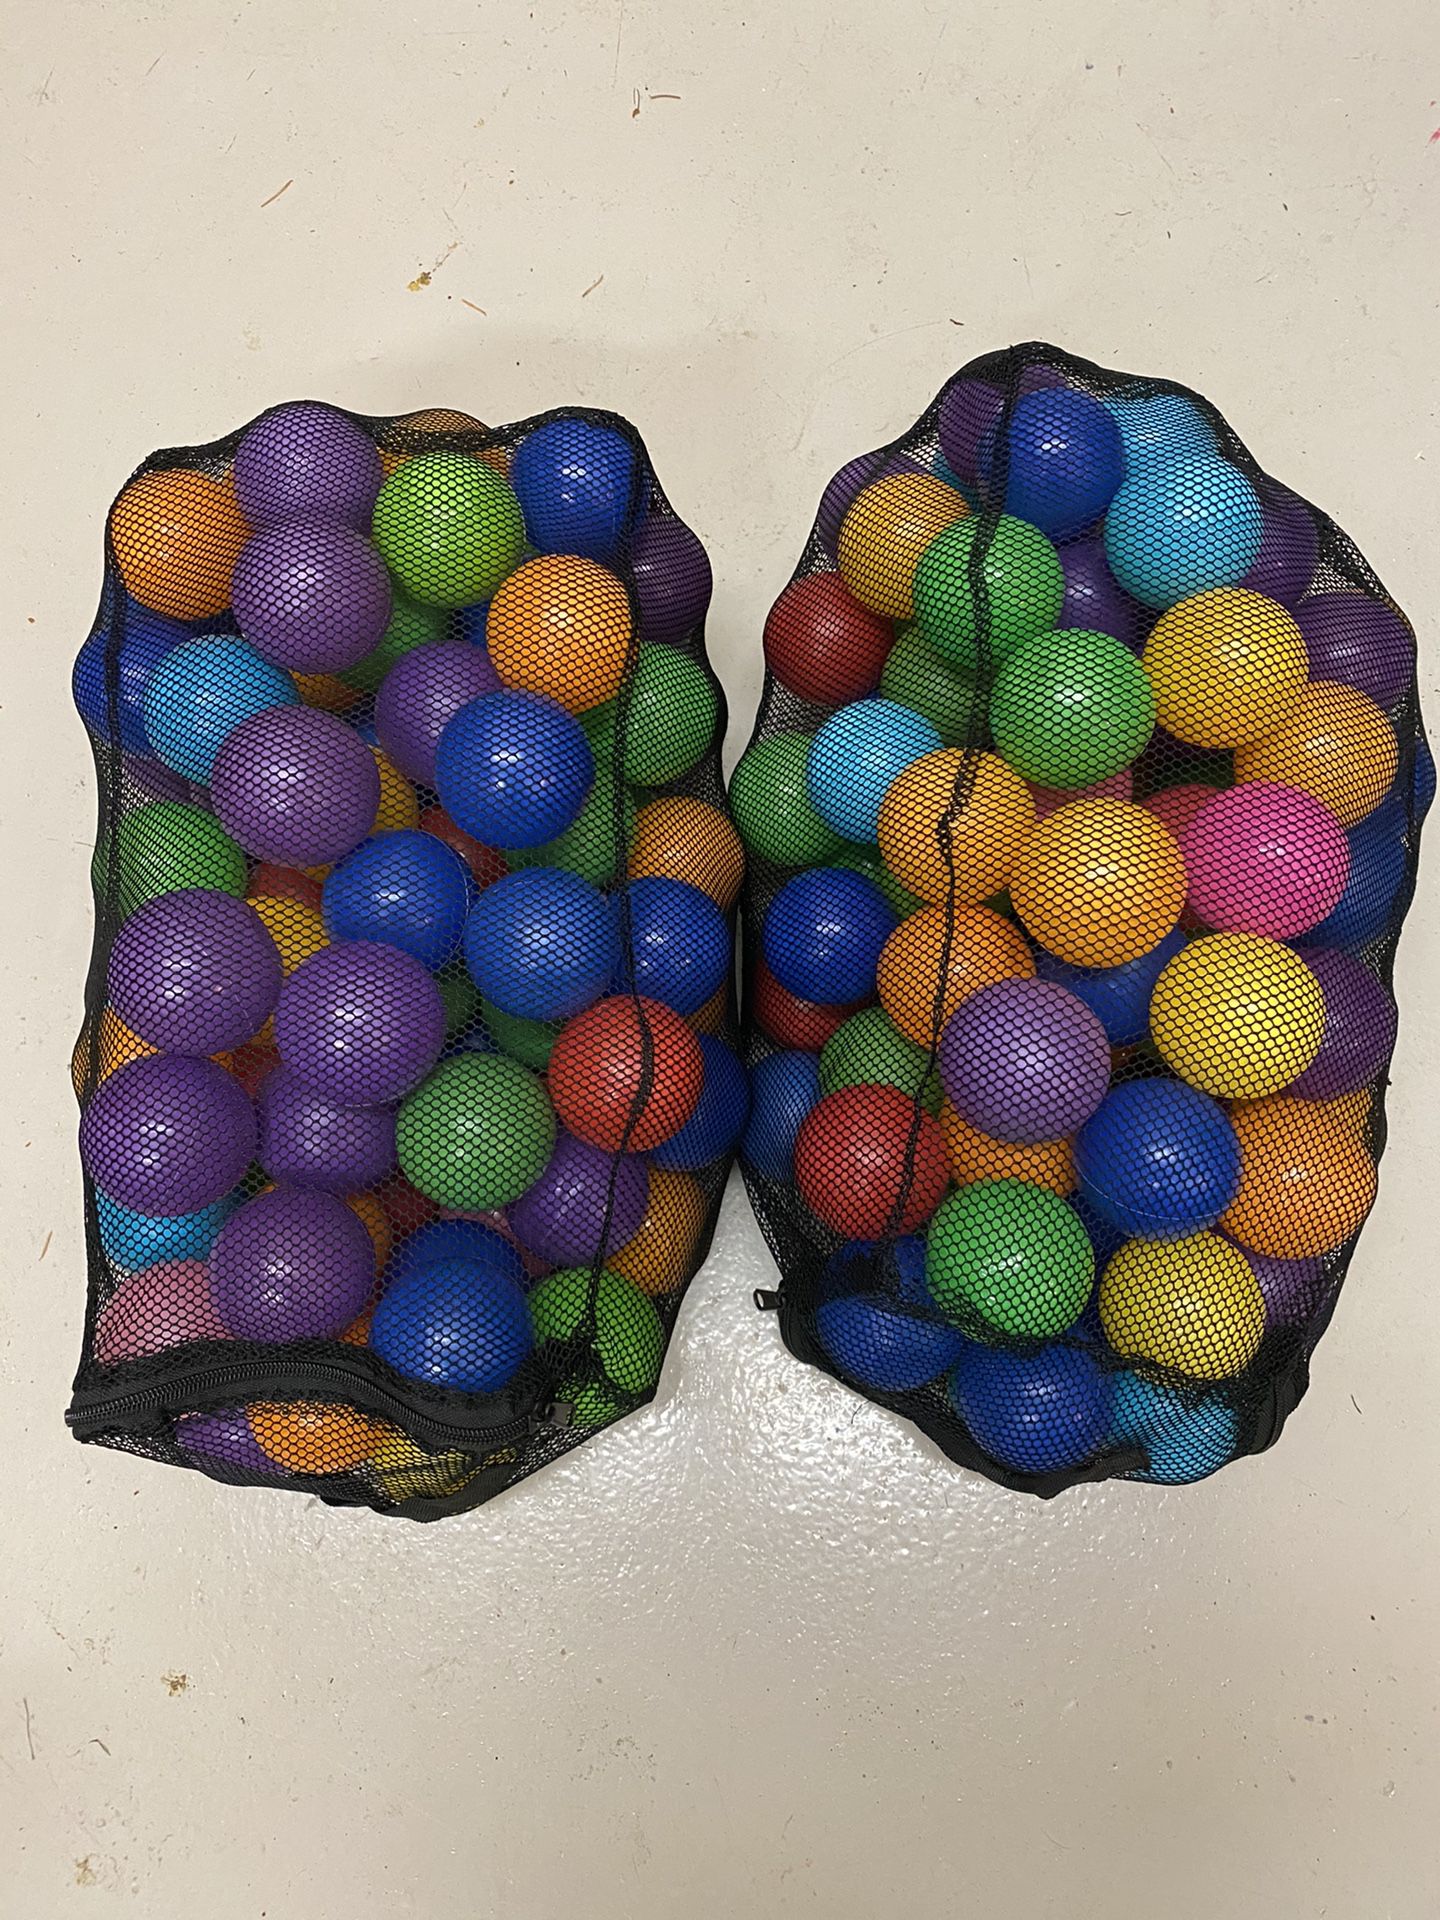 2 Bags Of Plastic Balls Toys, $5 Each Bag